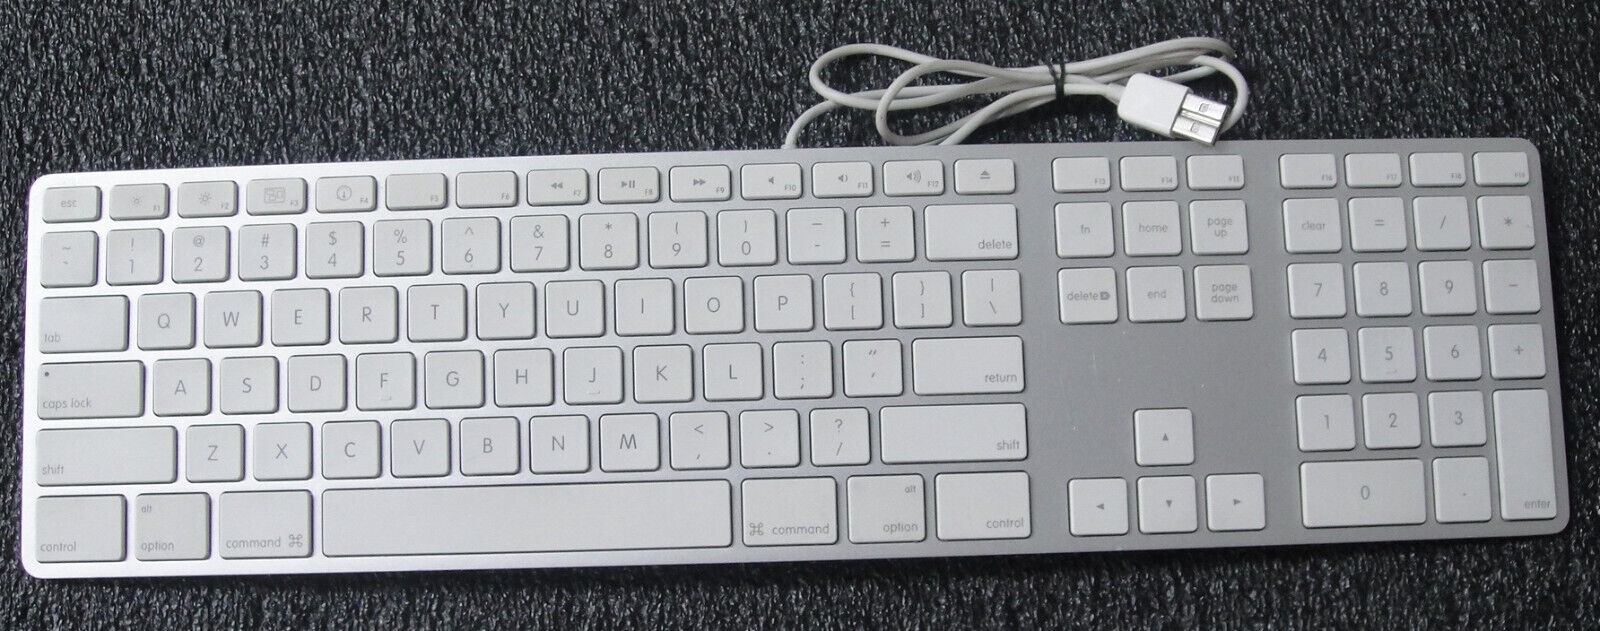 Genuine Apple USB Wired Keyboard with Numeric Keypad MB110LL/B A1243  Grade A